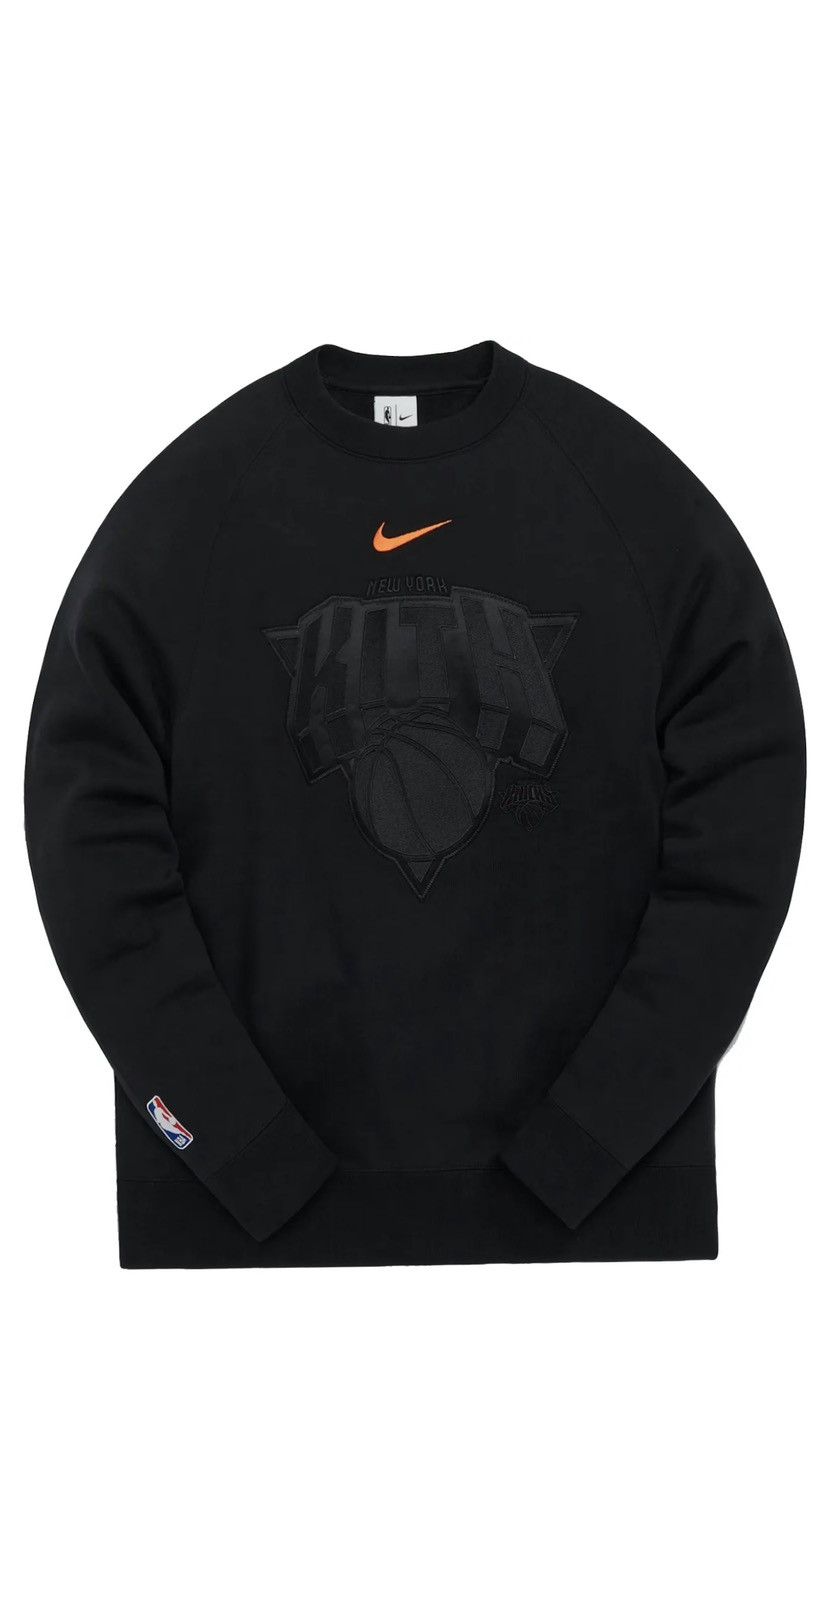 Kith & Nike for New York Knicks Fleece Crewneck 'Black' | Men's Size M